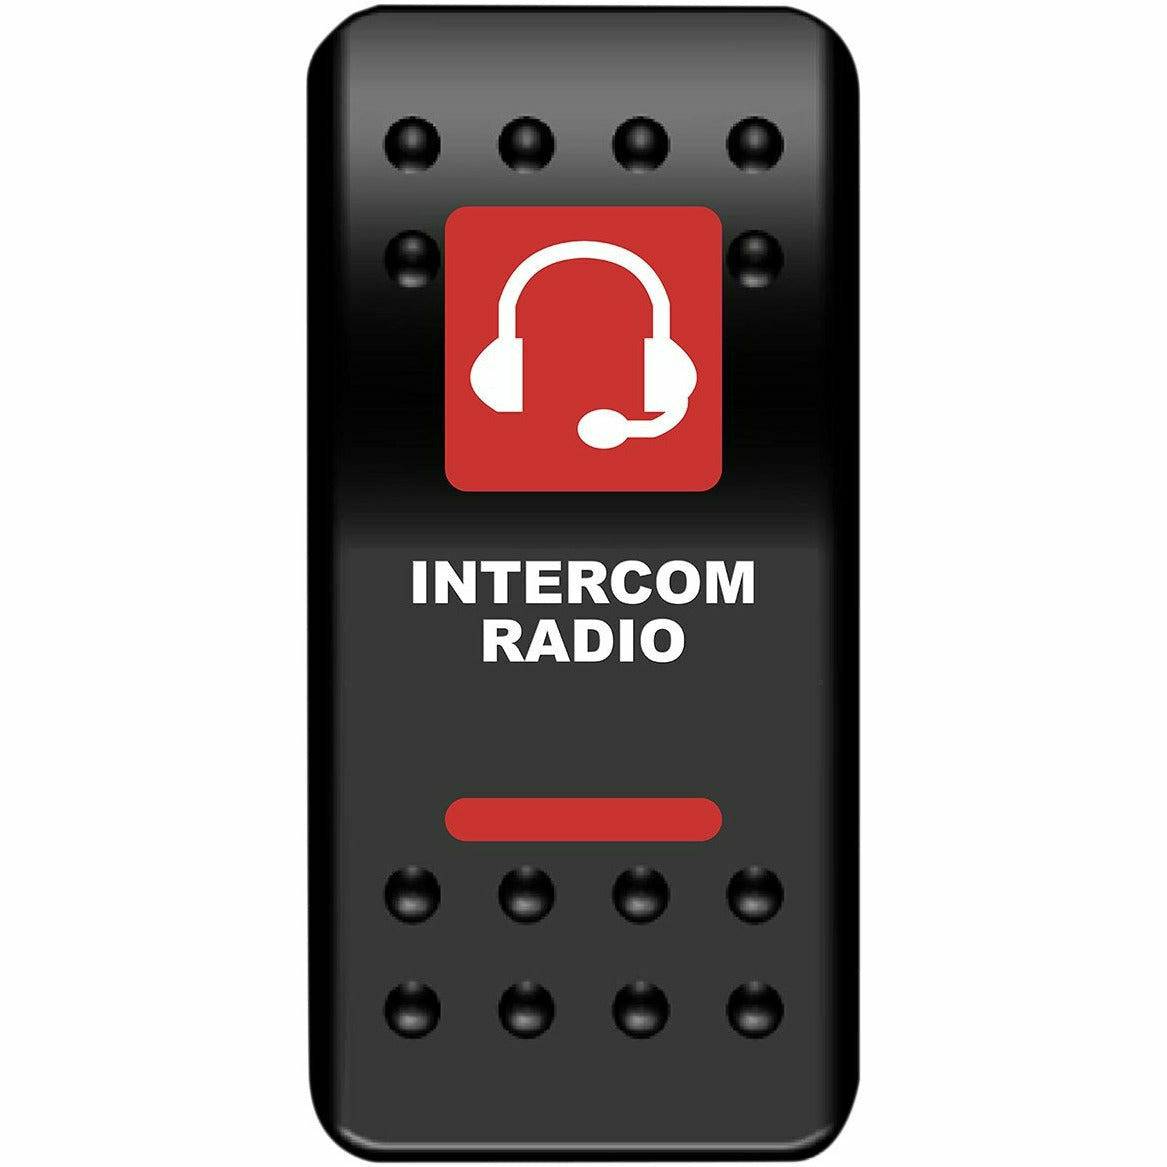 Moose Utility Intercom Radio Rocker Switch (Red)